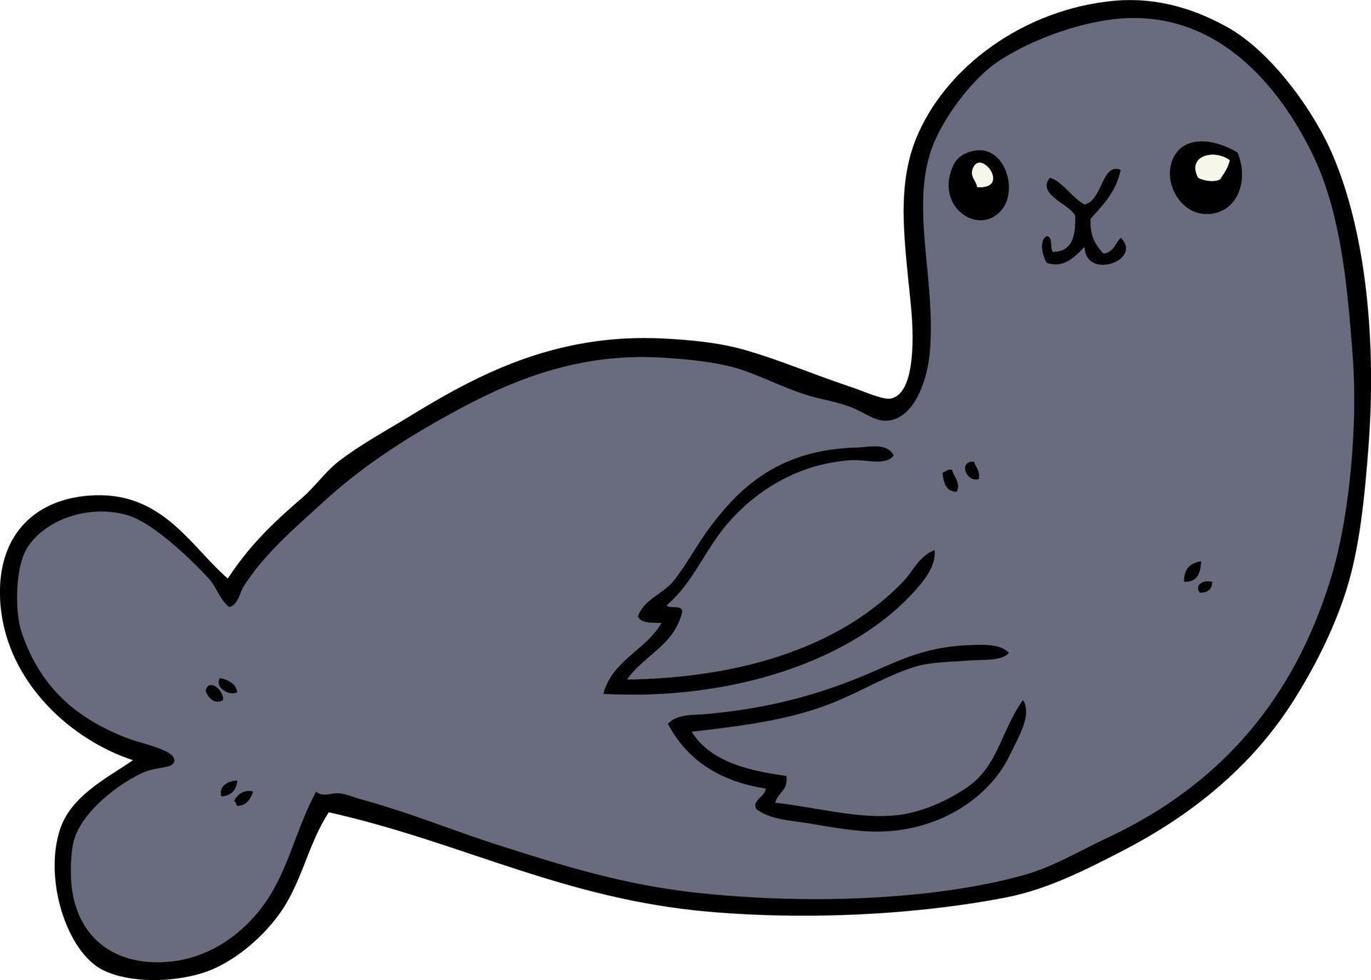 doodle character cartoon seal vector